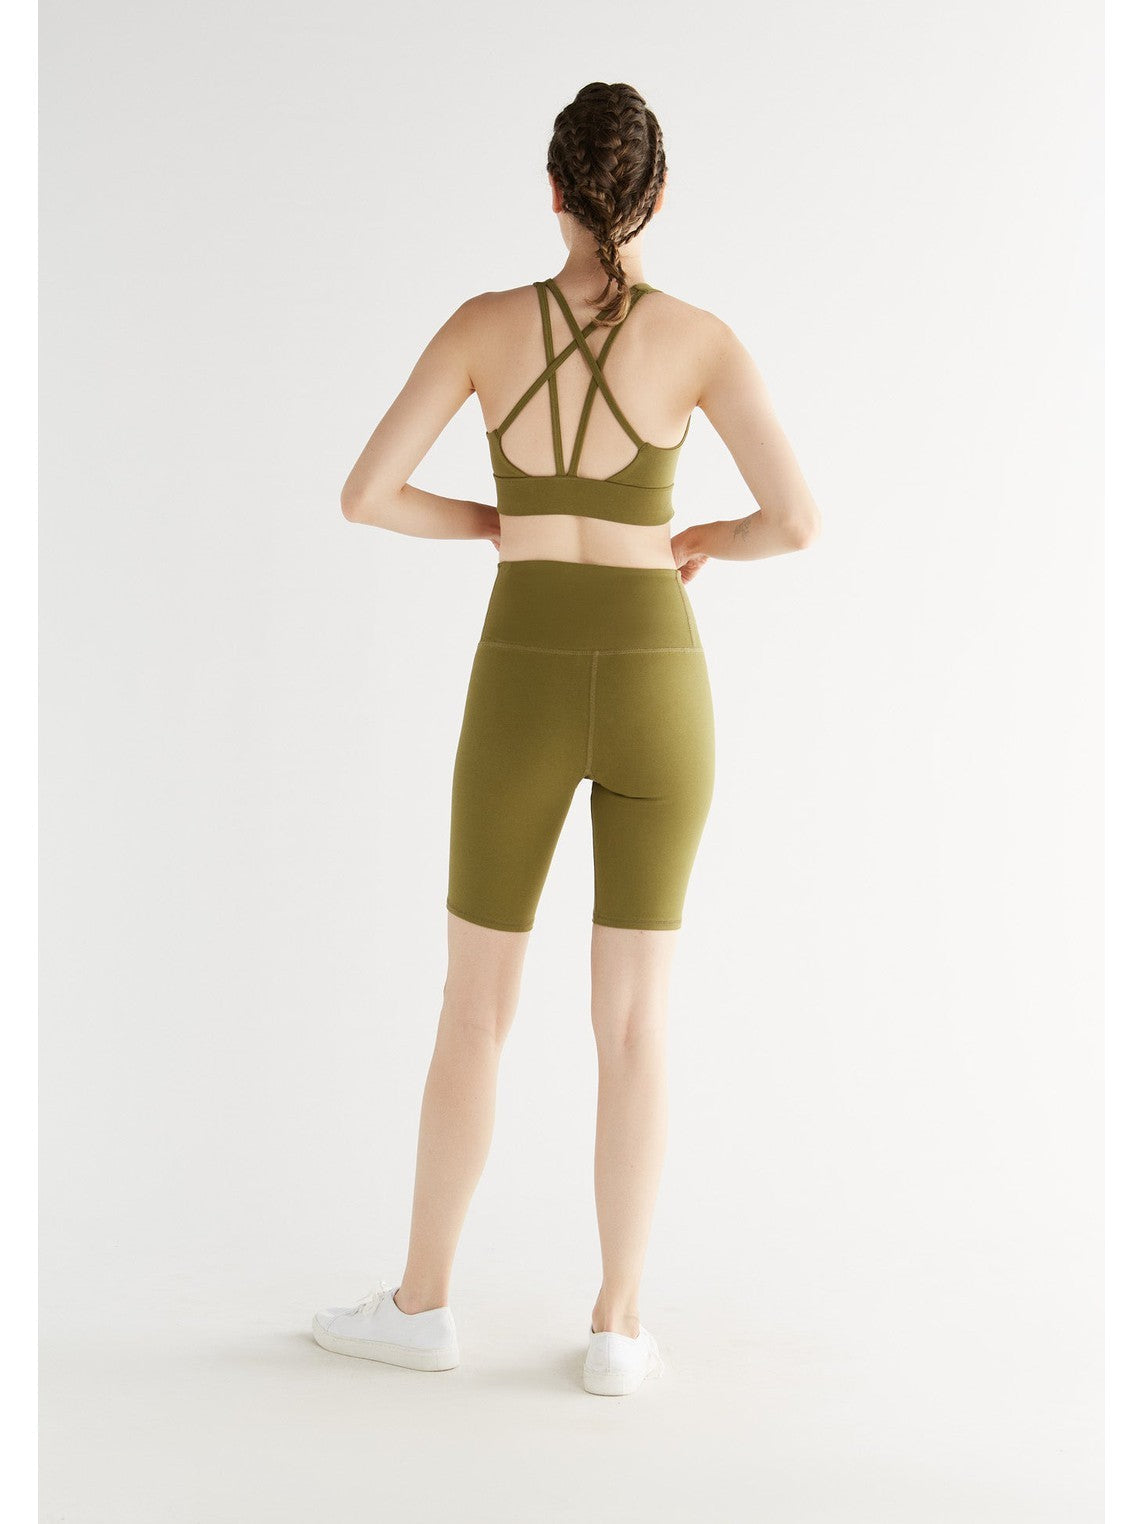 T1331-13 | Women Fit Shorts - Olive